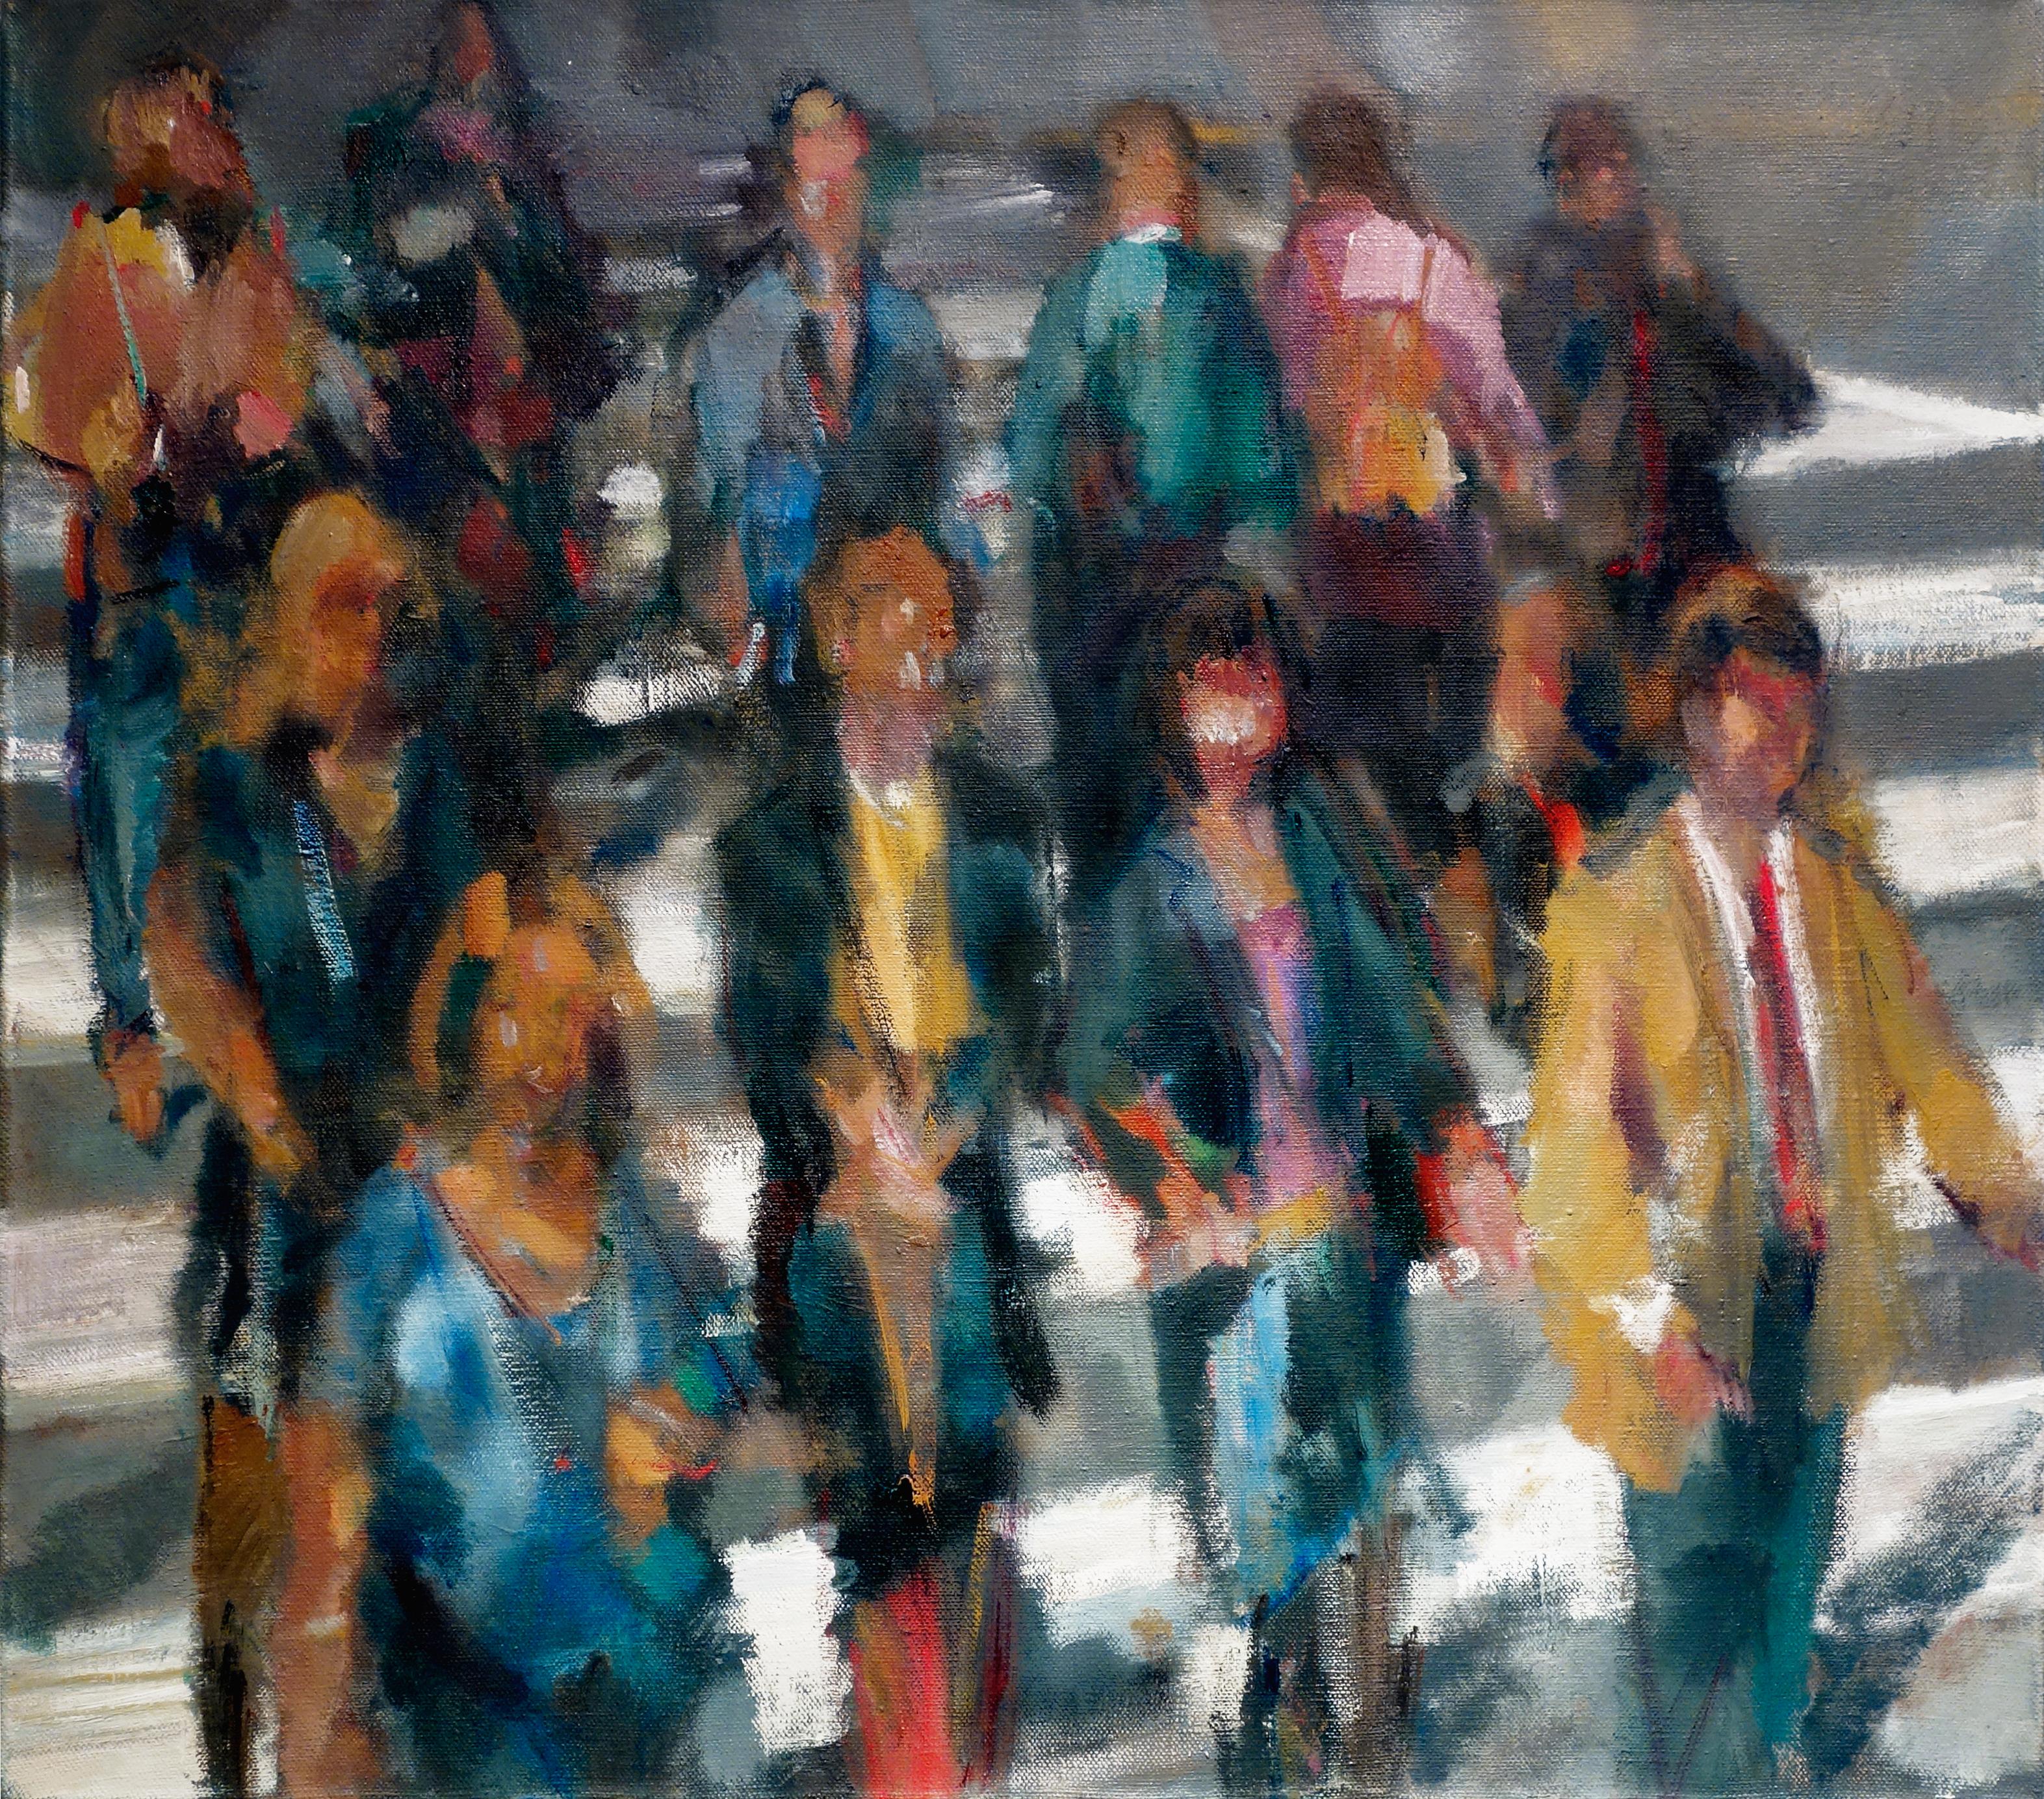 Simon Nicholas Figurative Painting - CROSSWALK, people crossing street, city, crowded street, oil paint, crowd